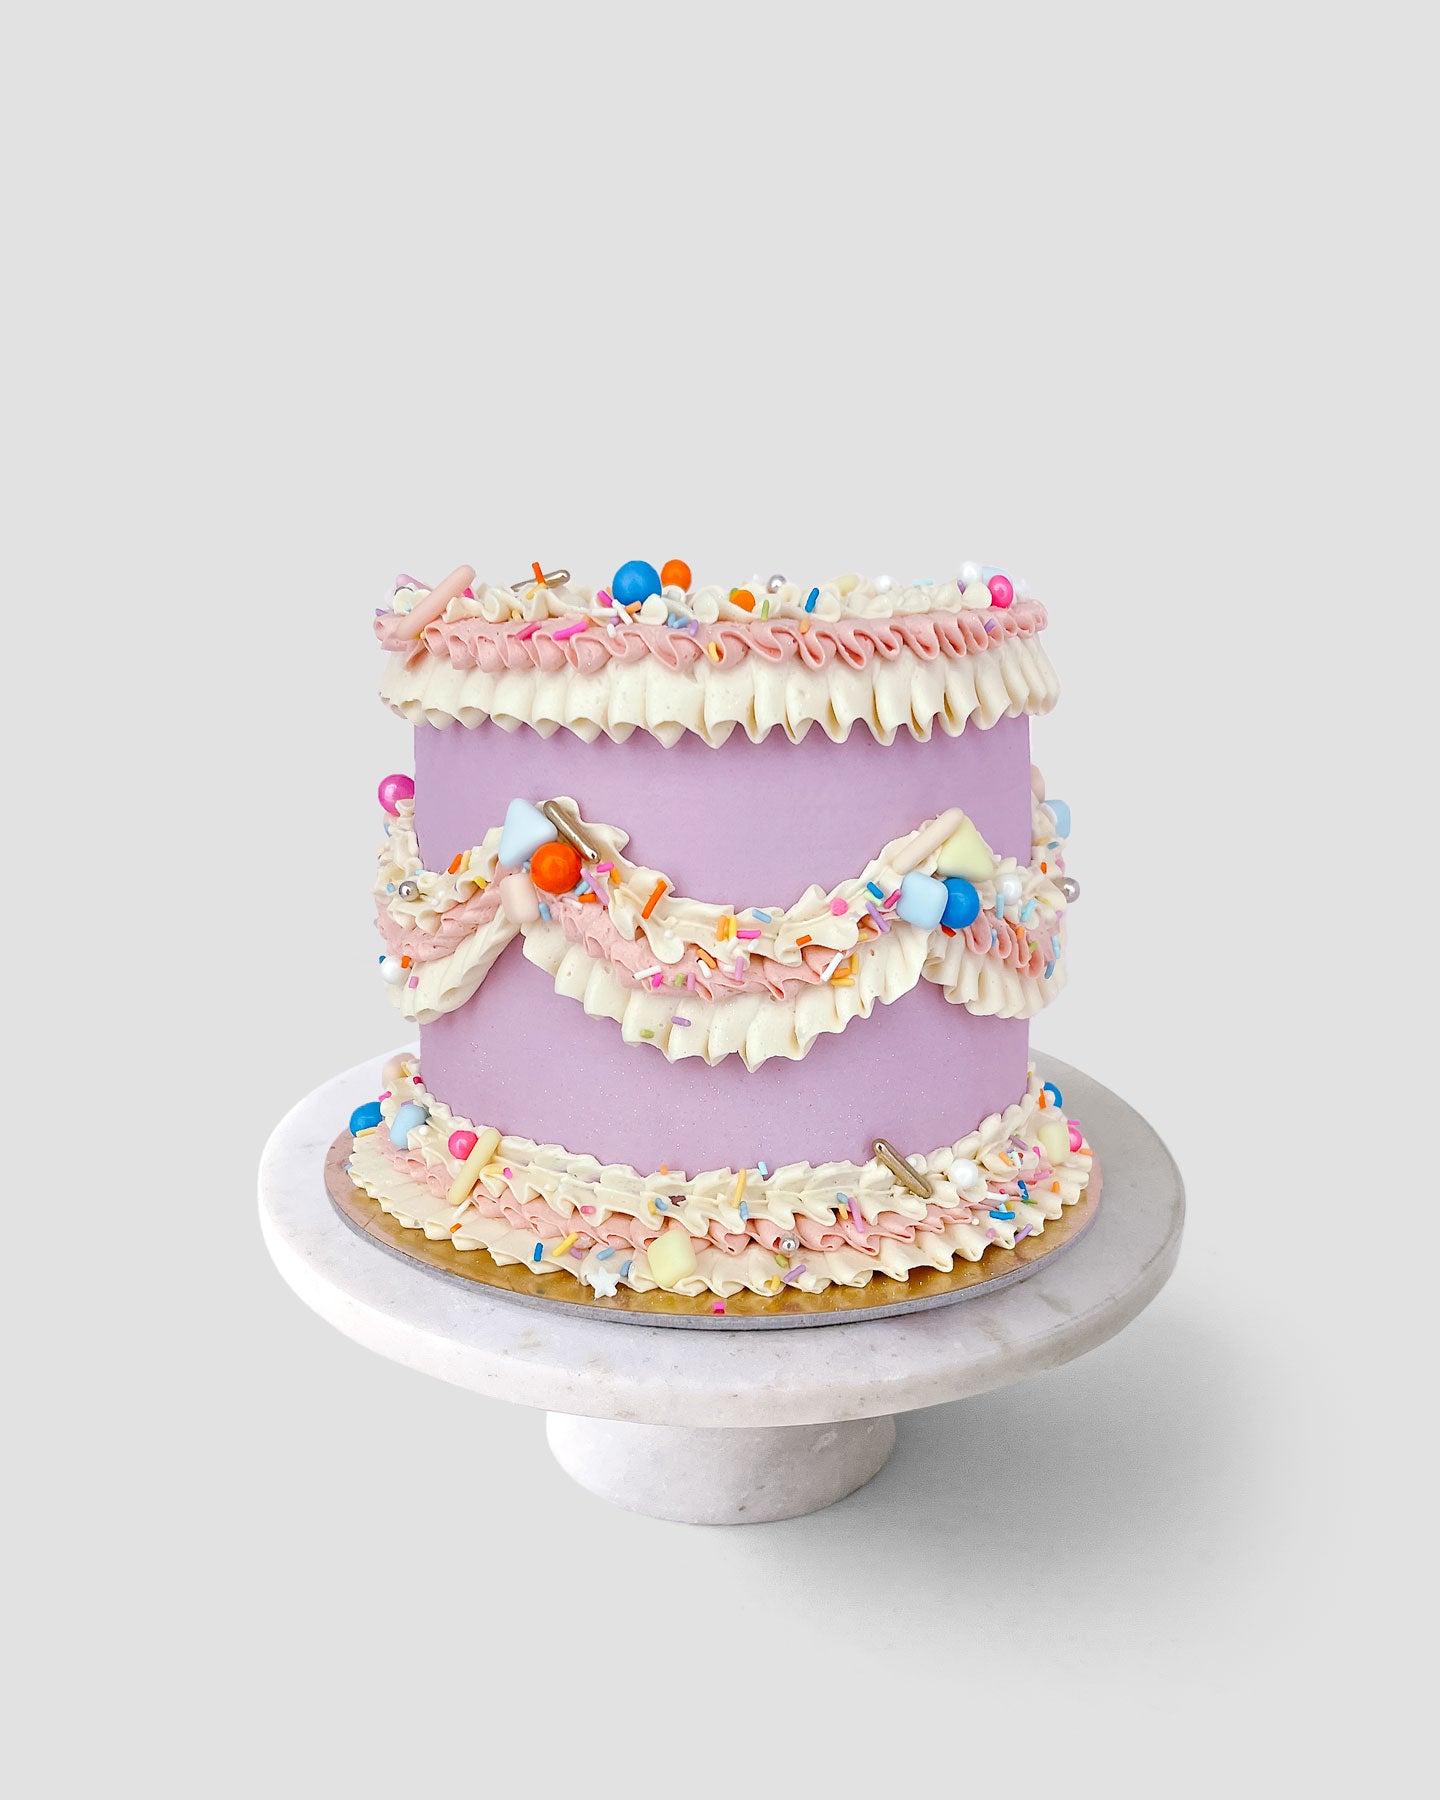 Icing cake frills on birthday cake at Cake International – The Sugarcraft,  Cake Decorating and Baking Show in London Stock Photo - Alamy